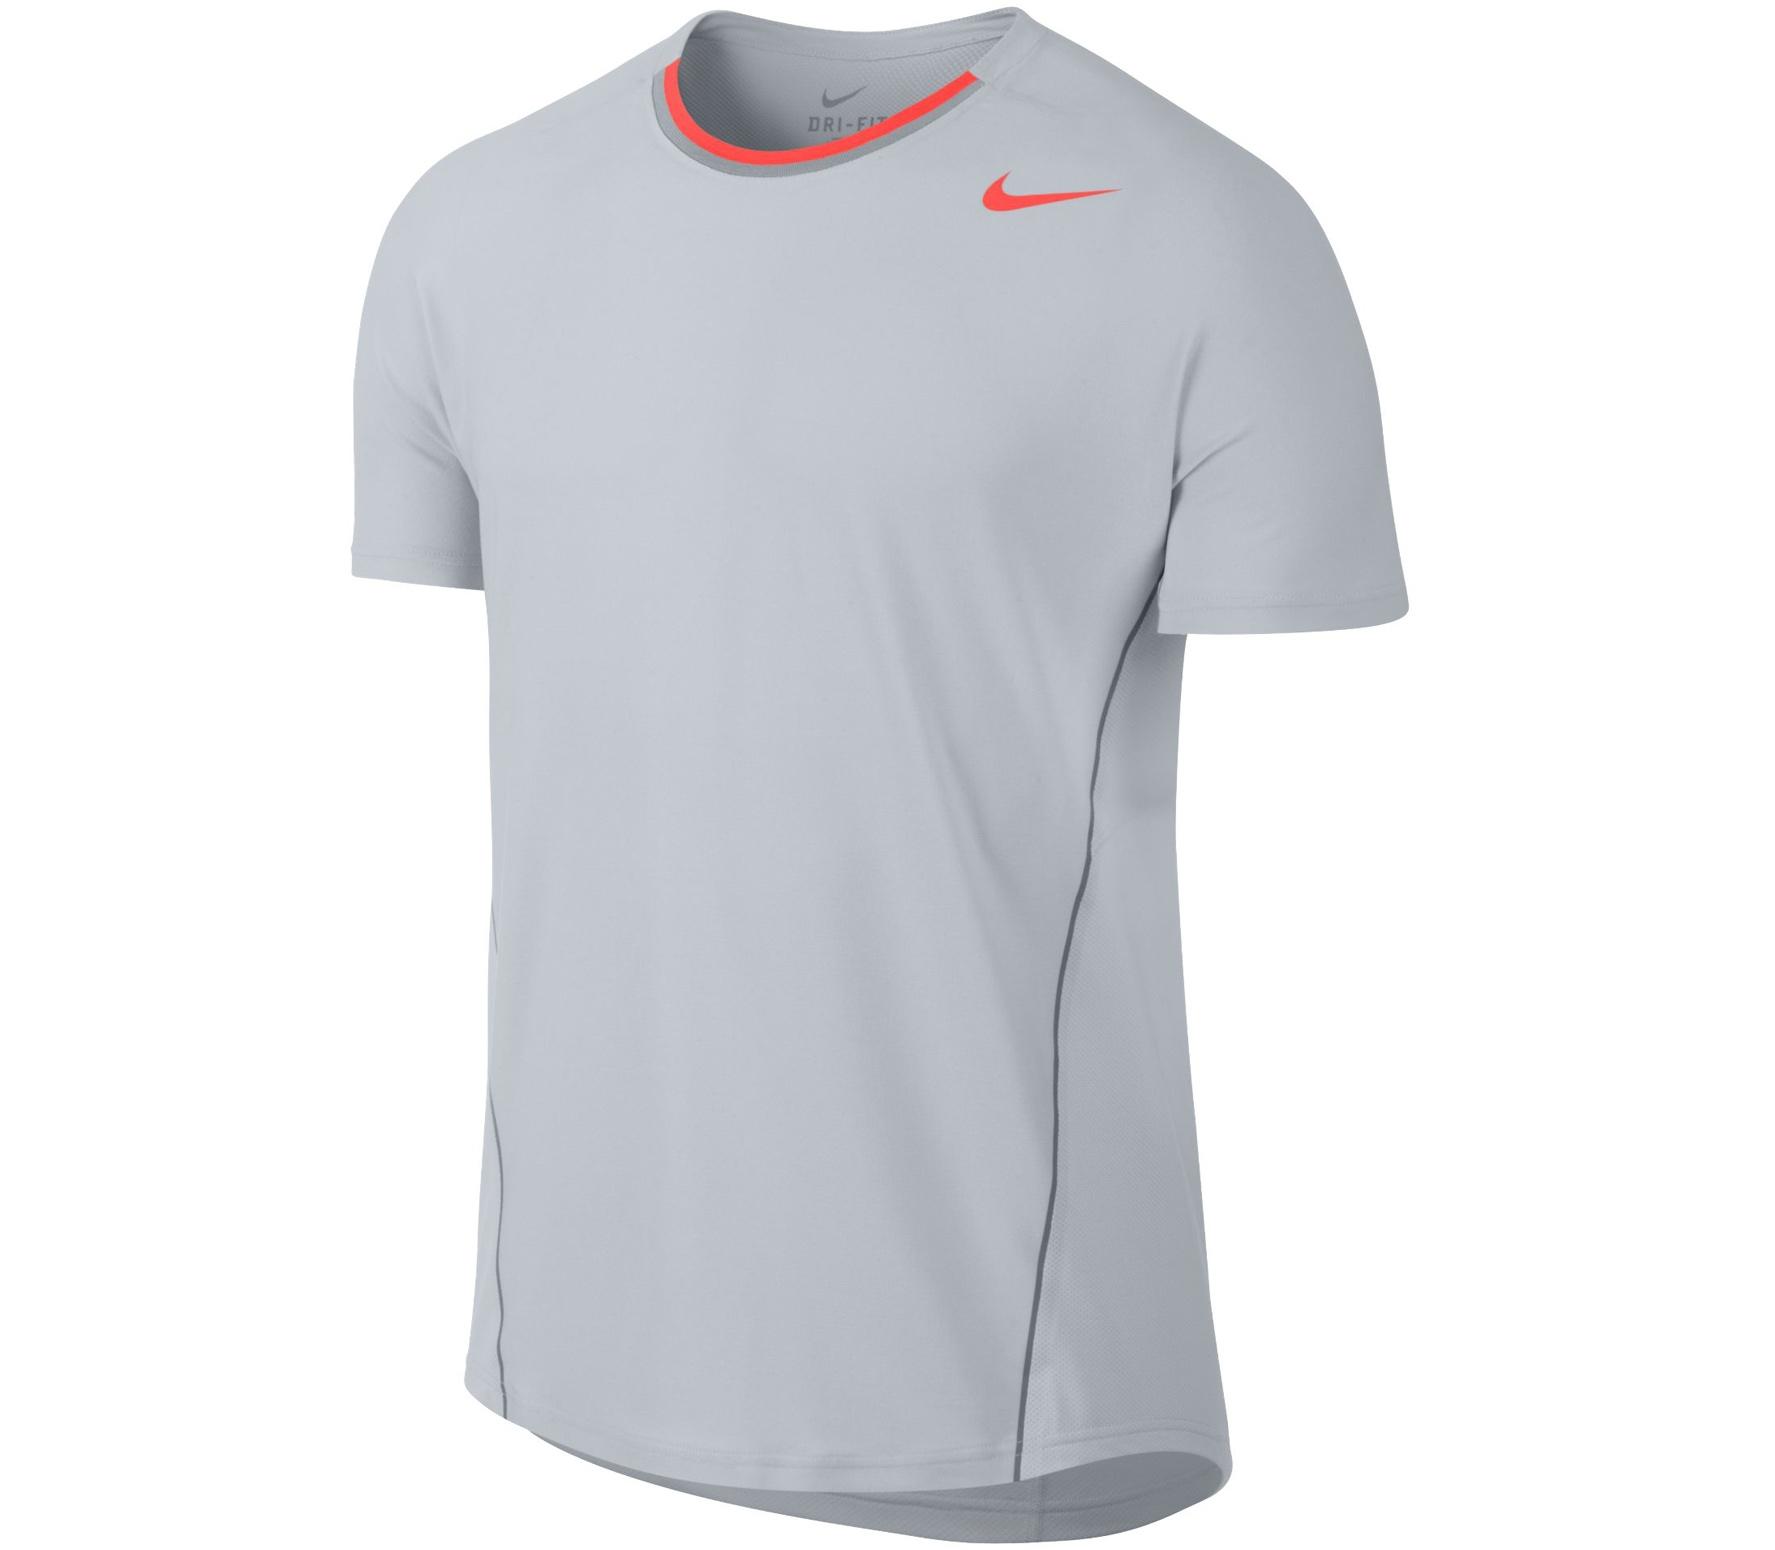 Foto Nike - Camiseta Tenis Hombre Premier Rafael Nadal Crew - SU13 foto 553084